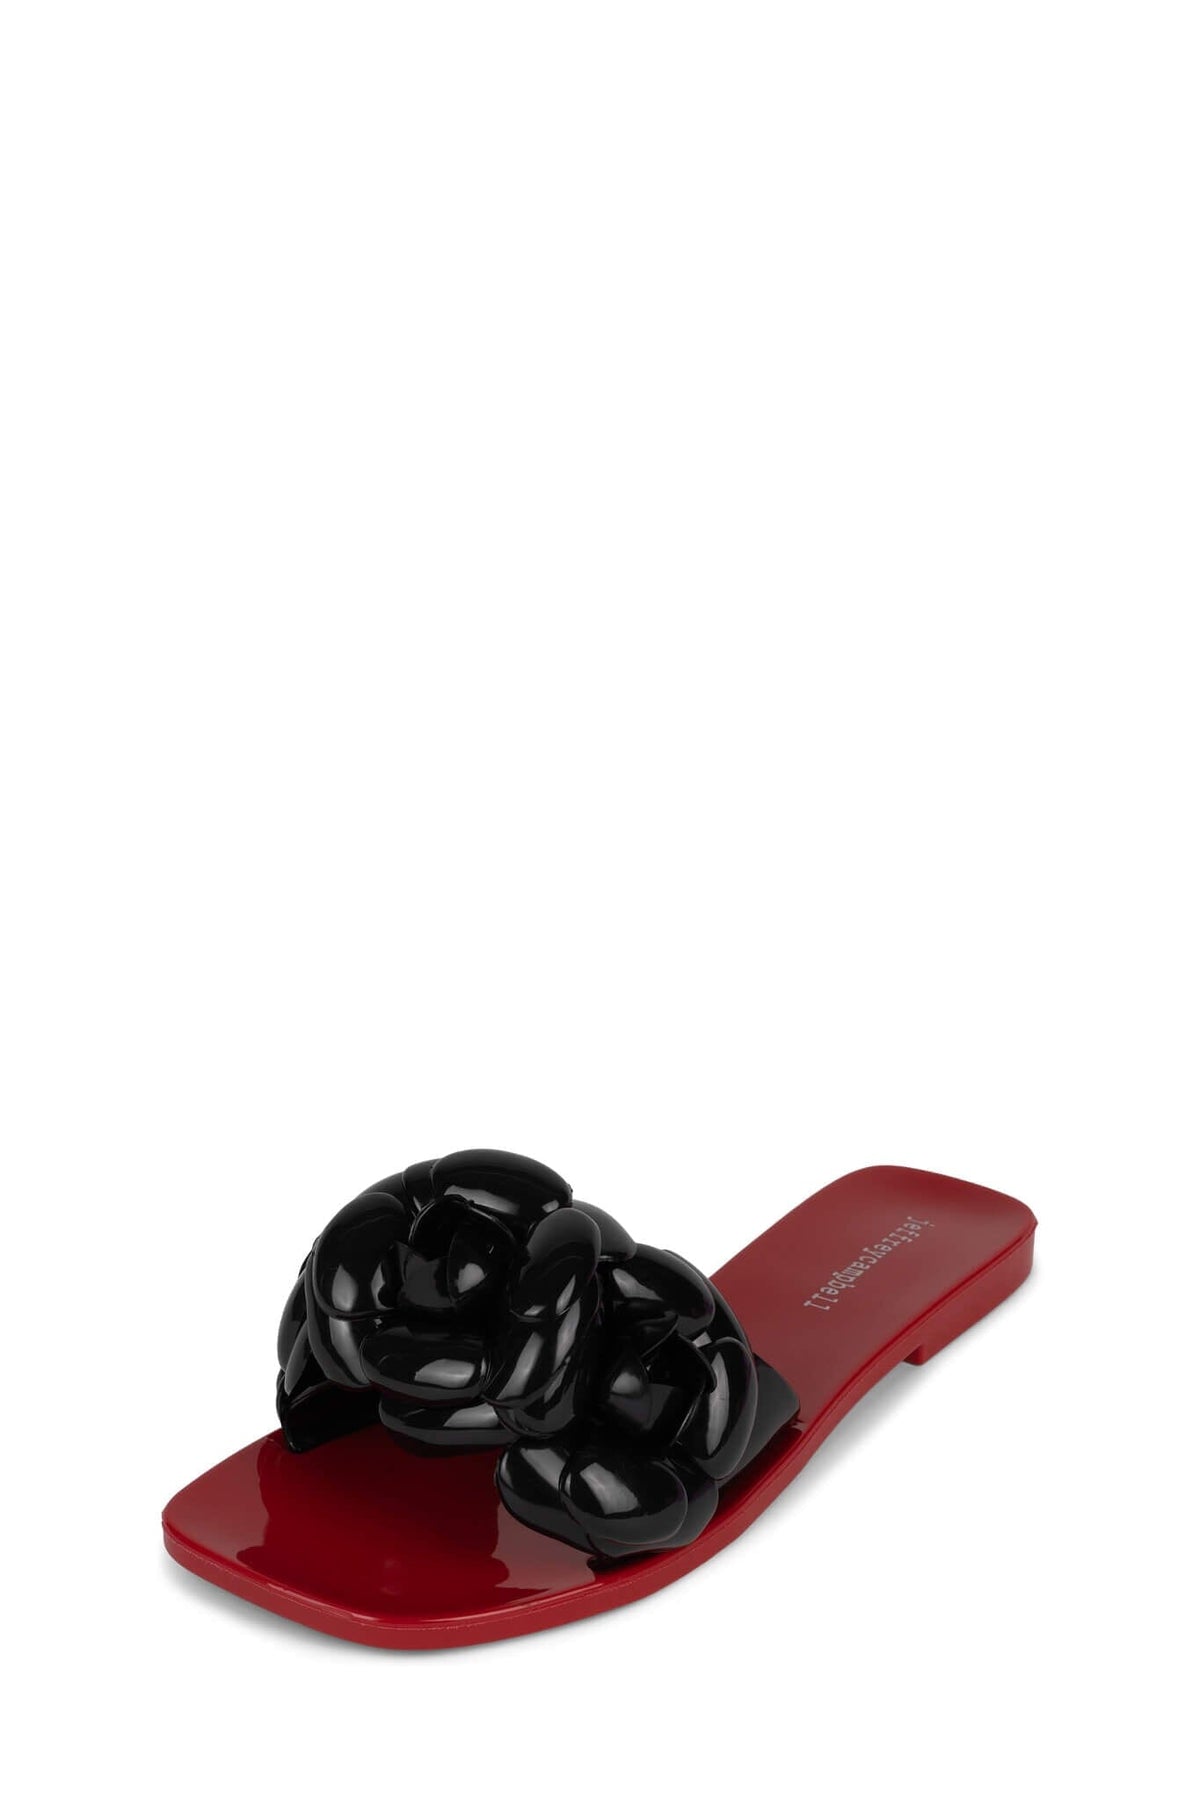 FLORALEE Jeffrey Campbell Jelly Sandals Black Shiny Red Shiny